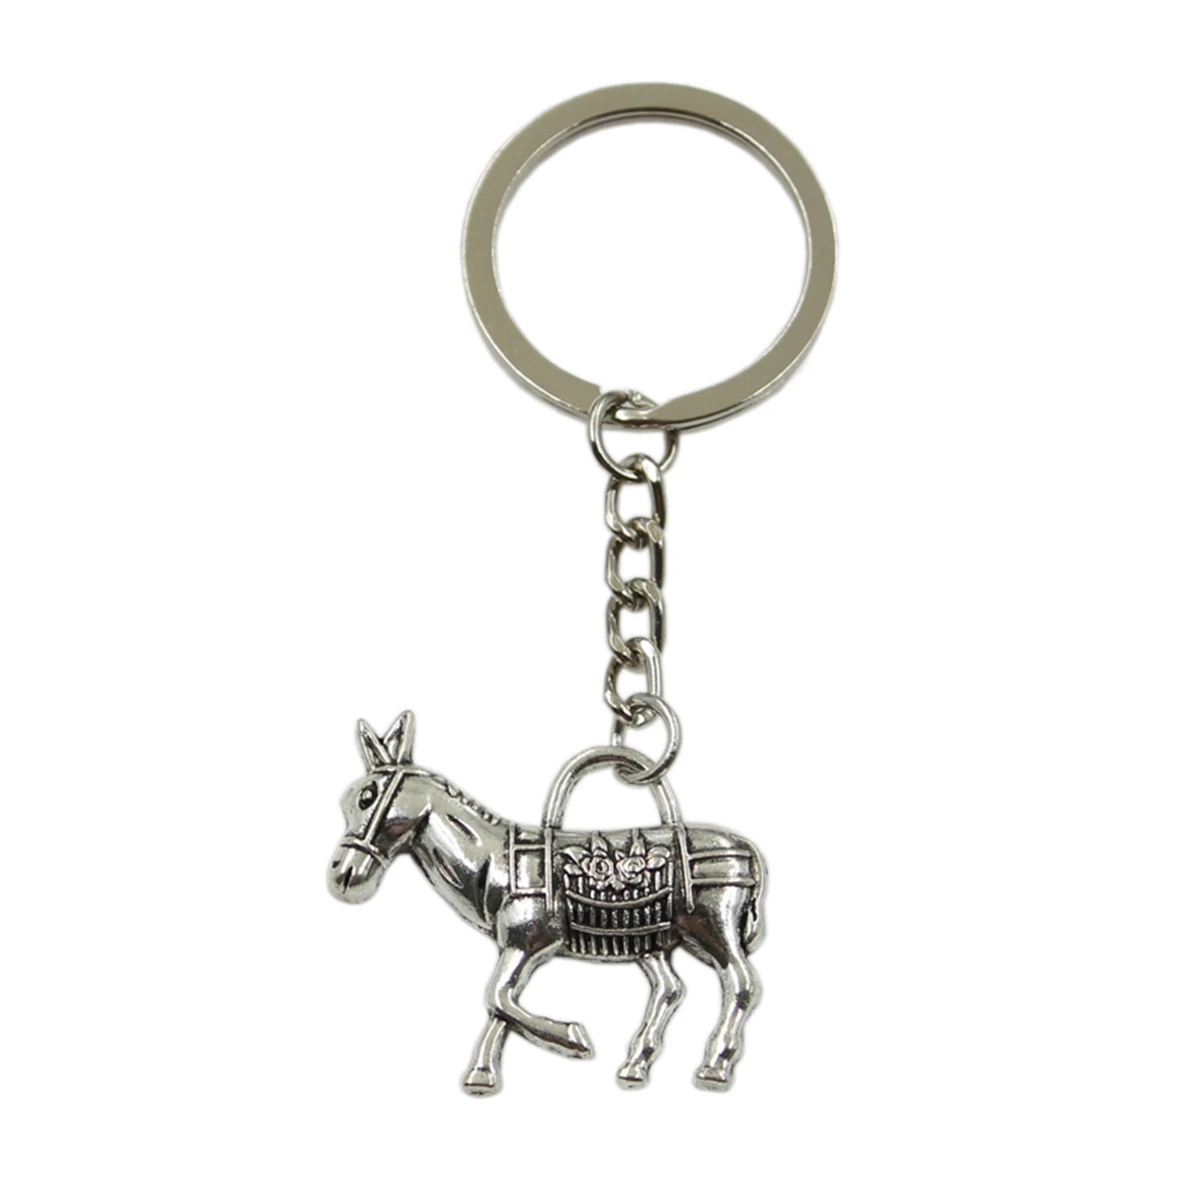 Donkey Image Design Metal Chunky Keyring in Gift Box 